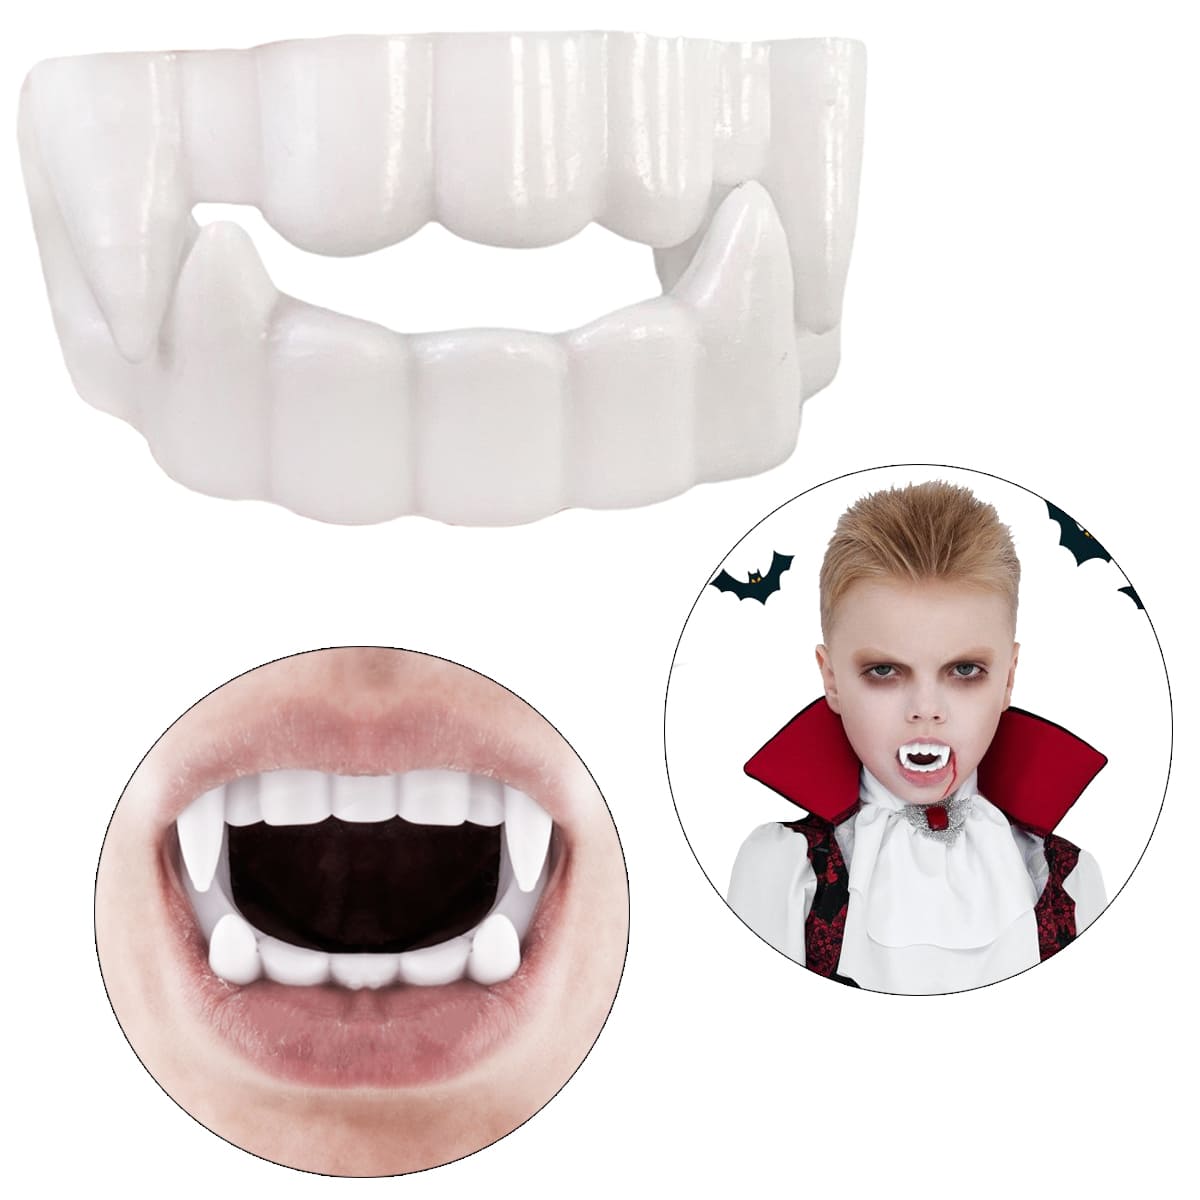 Dentadura Plástica de Vampiro Acessório Halloween.